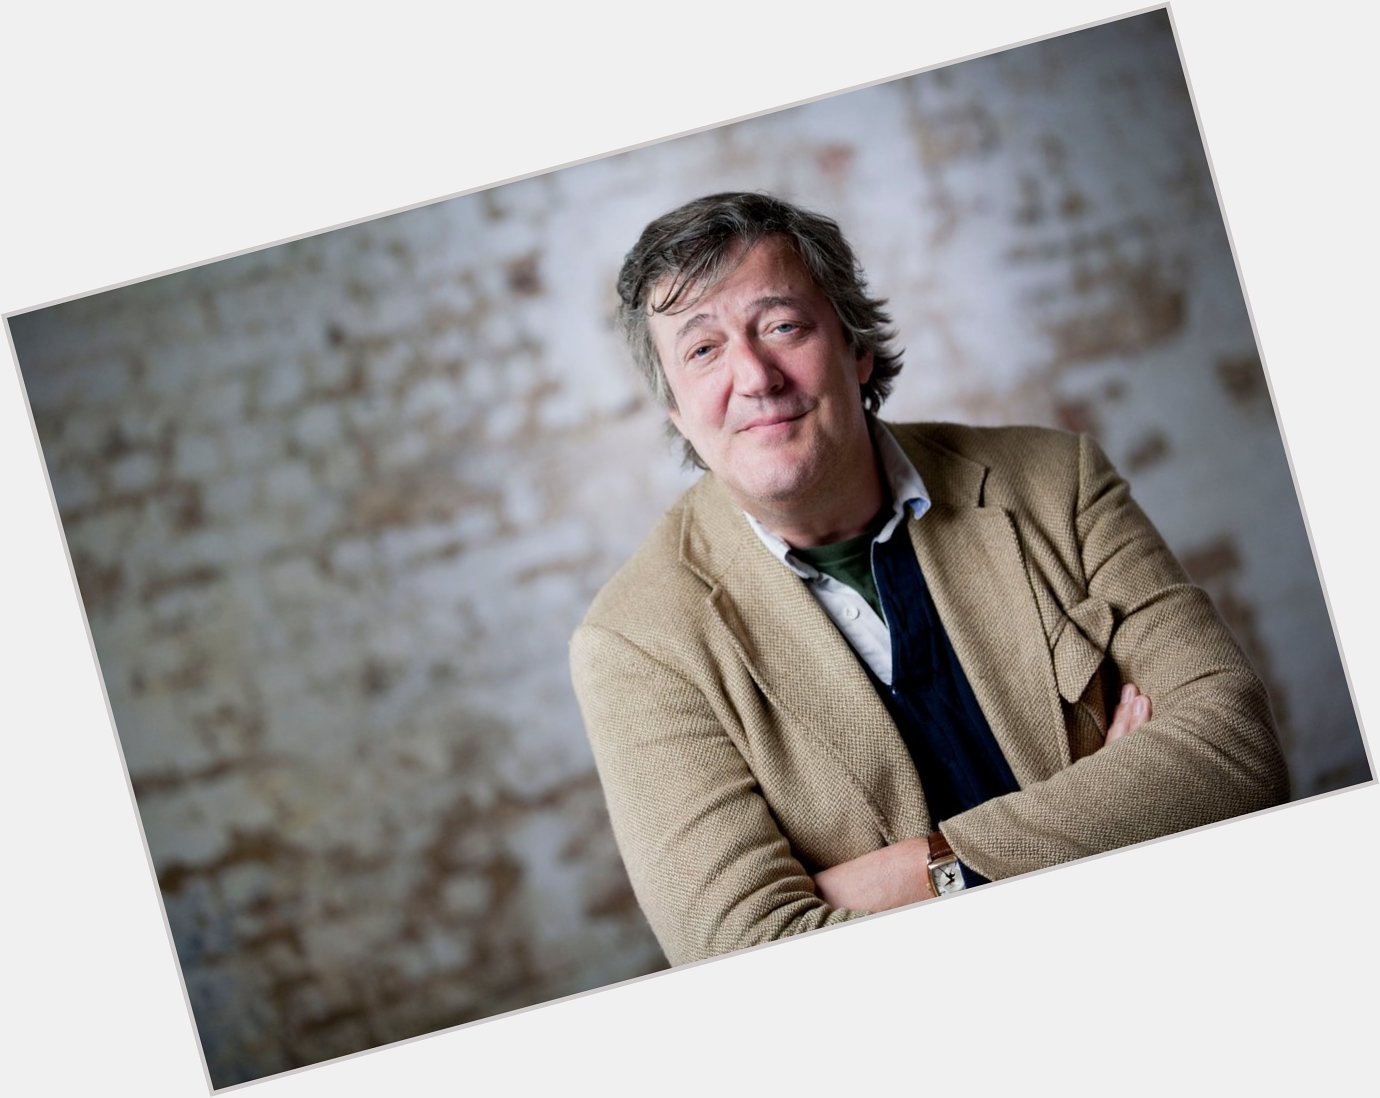  Happy Birthday comedian, actor, writer, presenter, and activist Stephen Fry! 